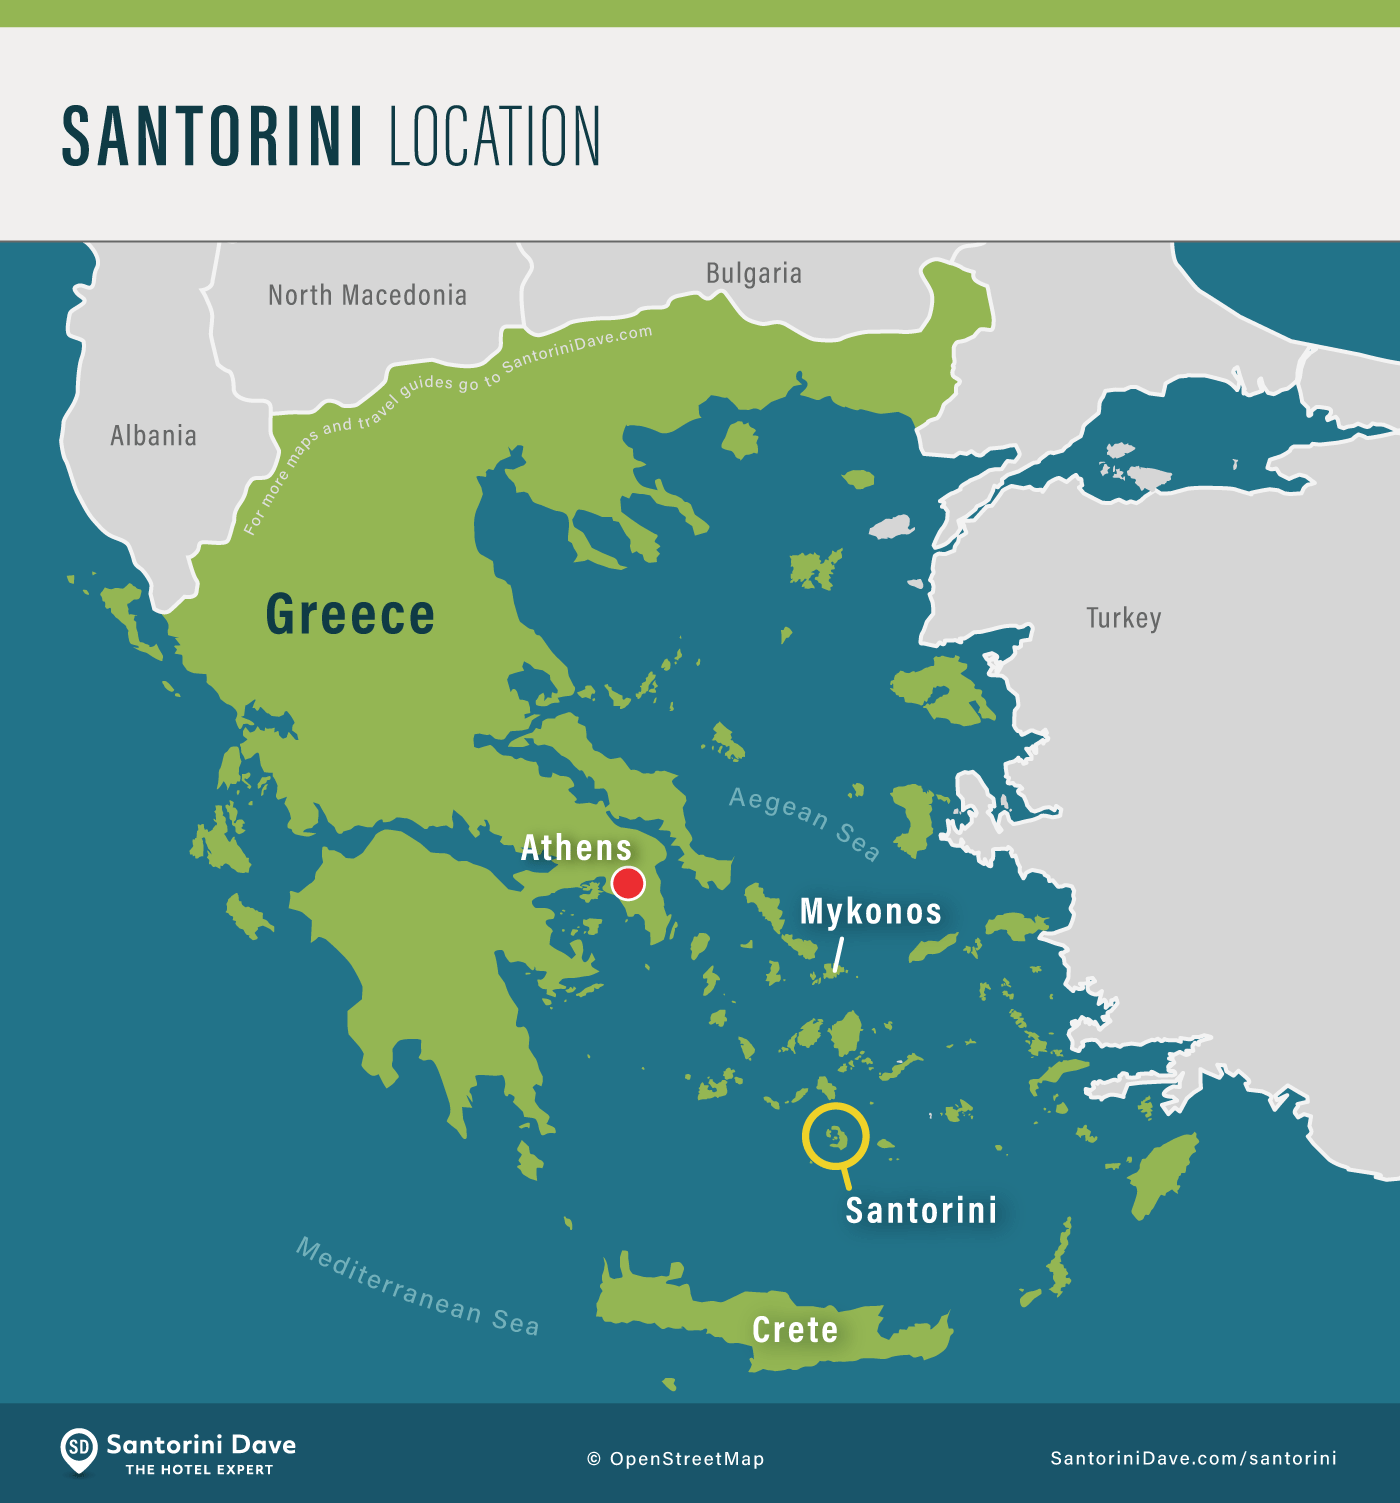 Where Is Santorini?